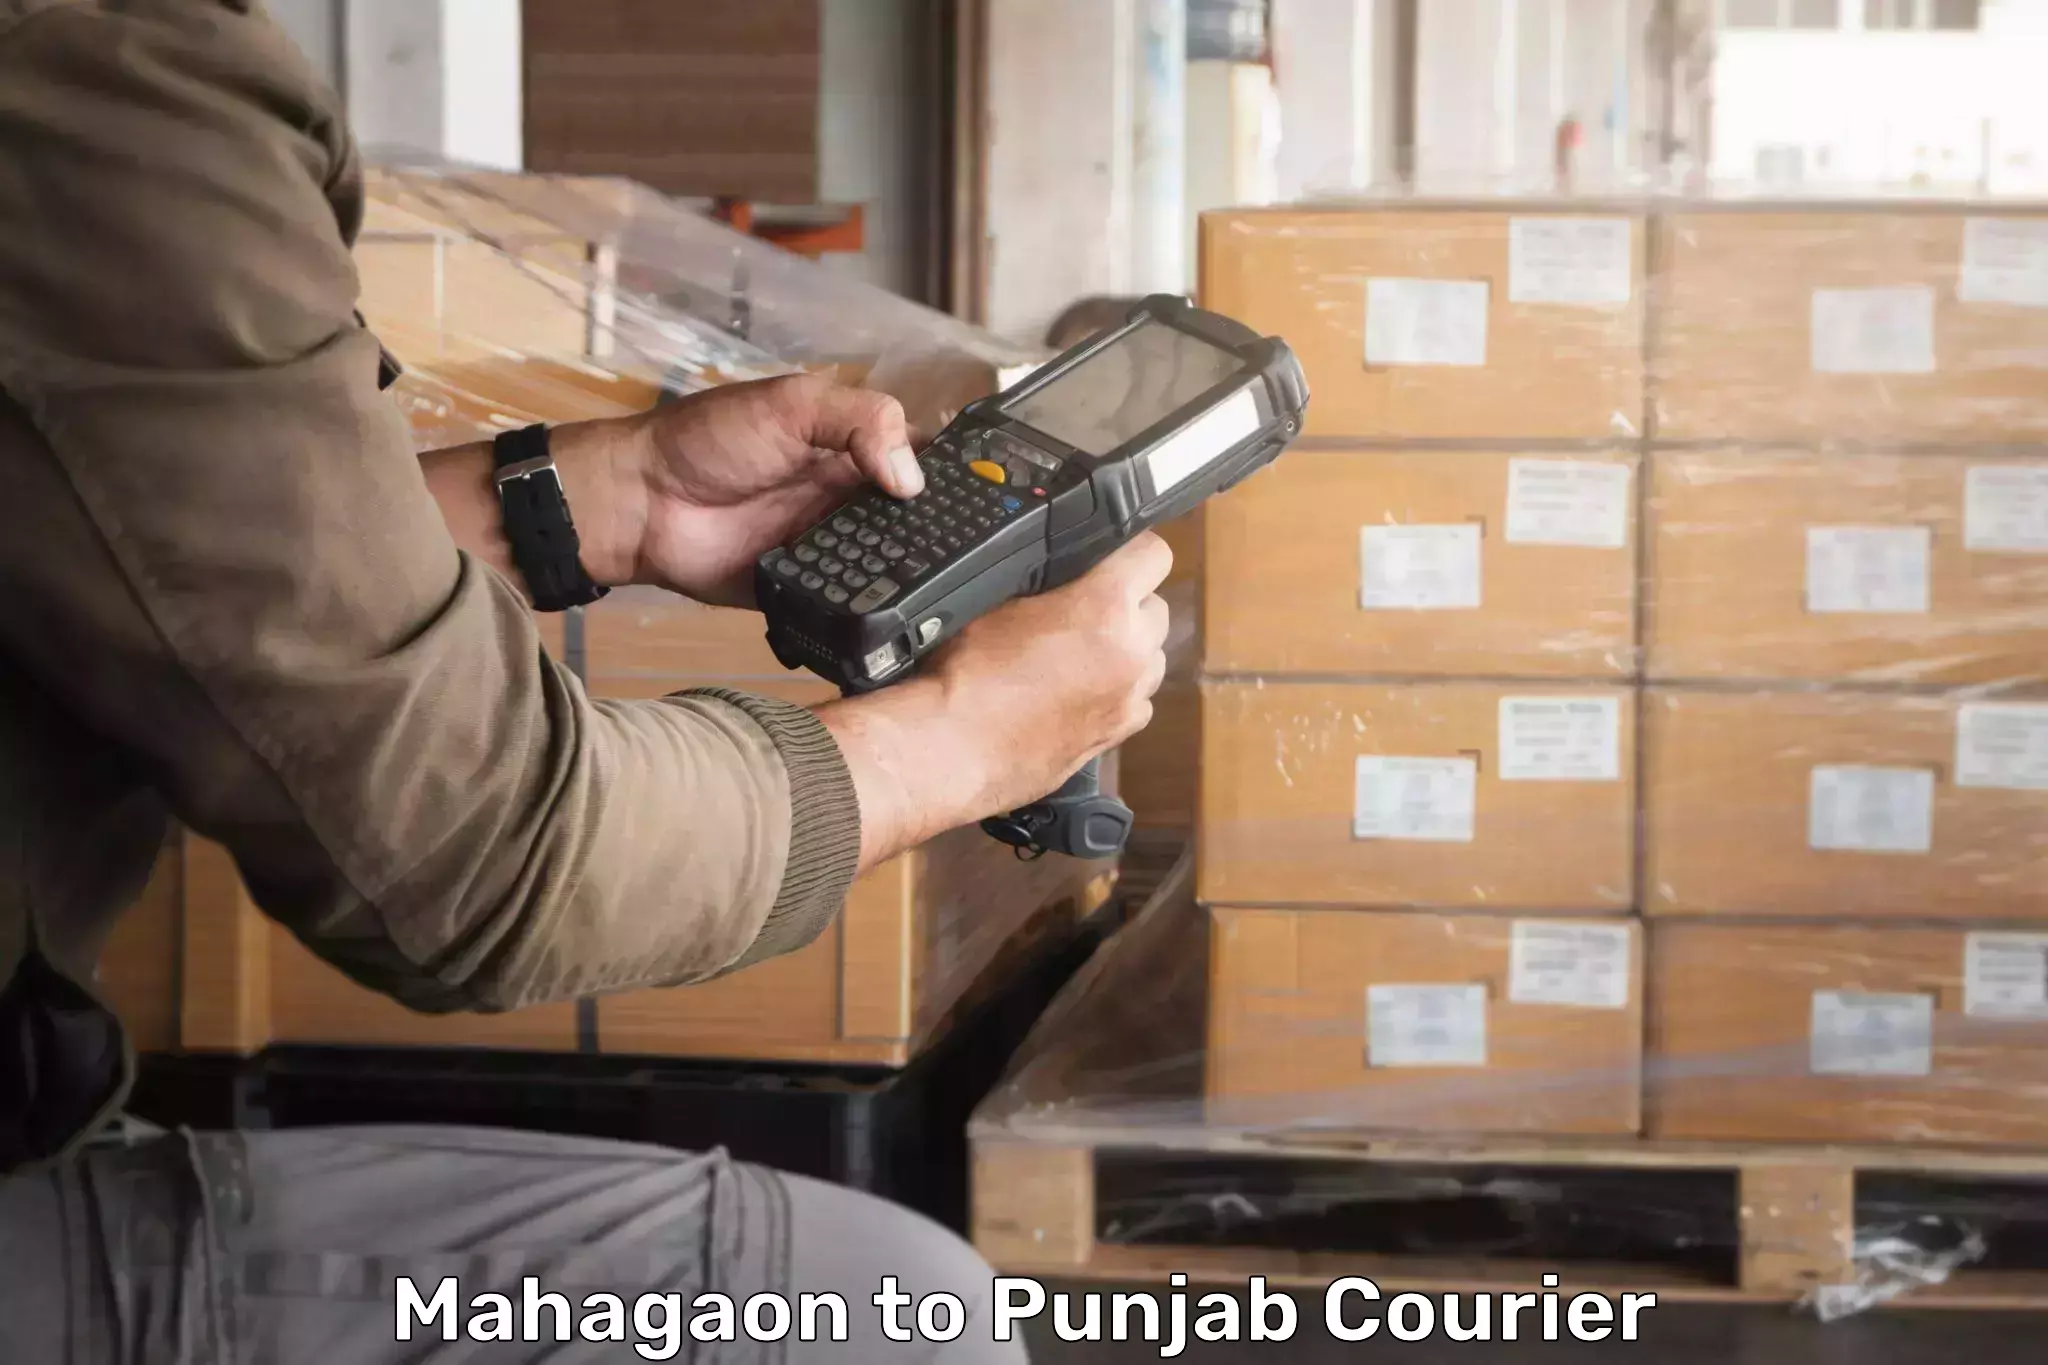 Personalized courier experiences Mahagaon to Bathinda